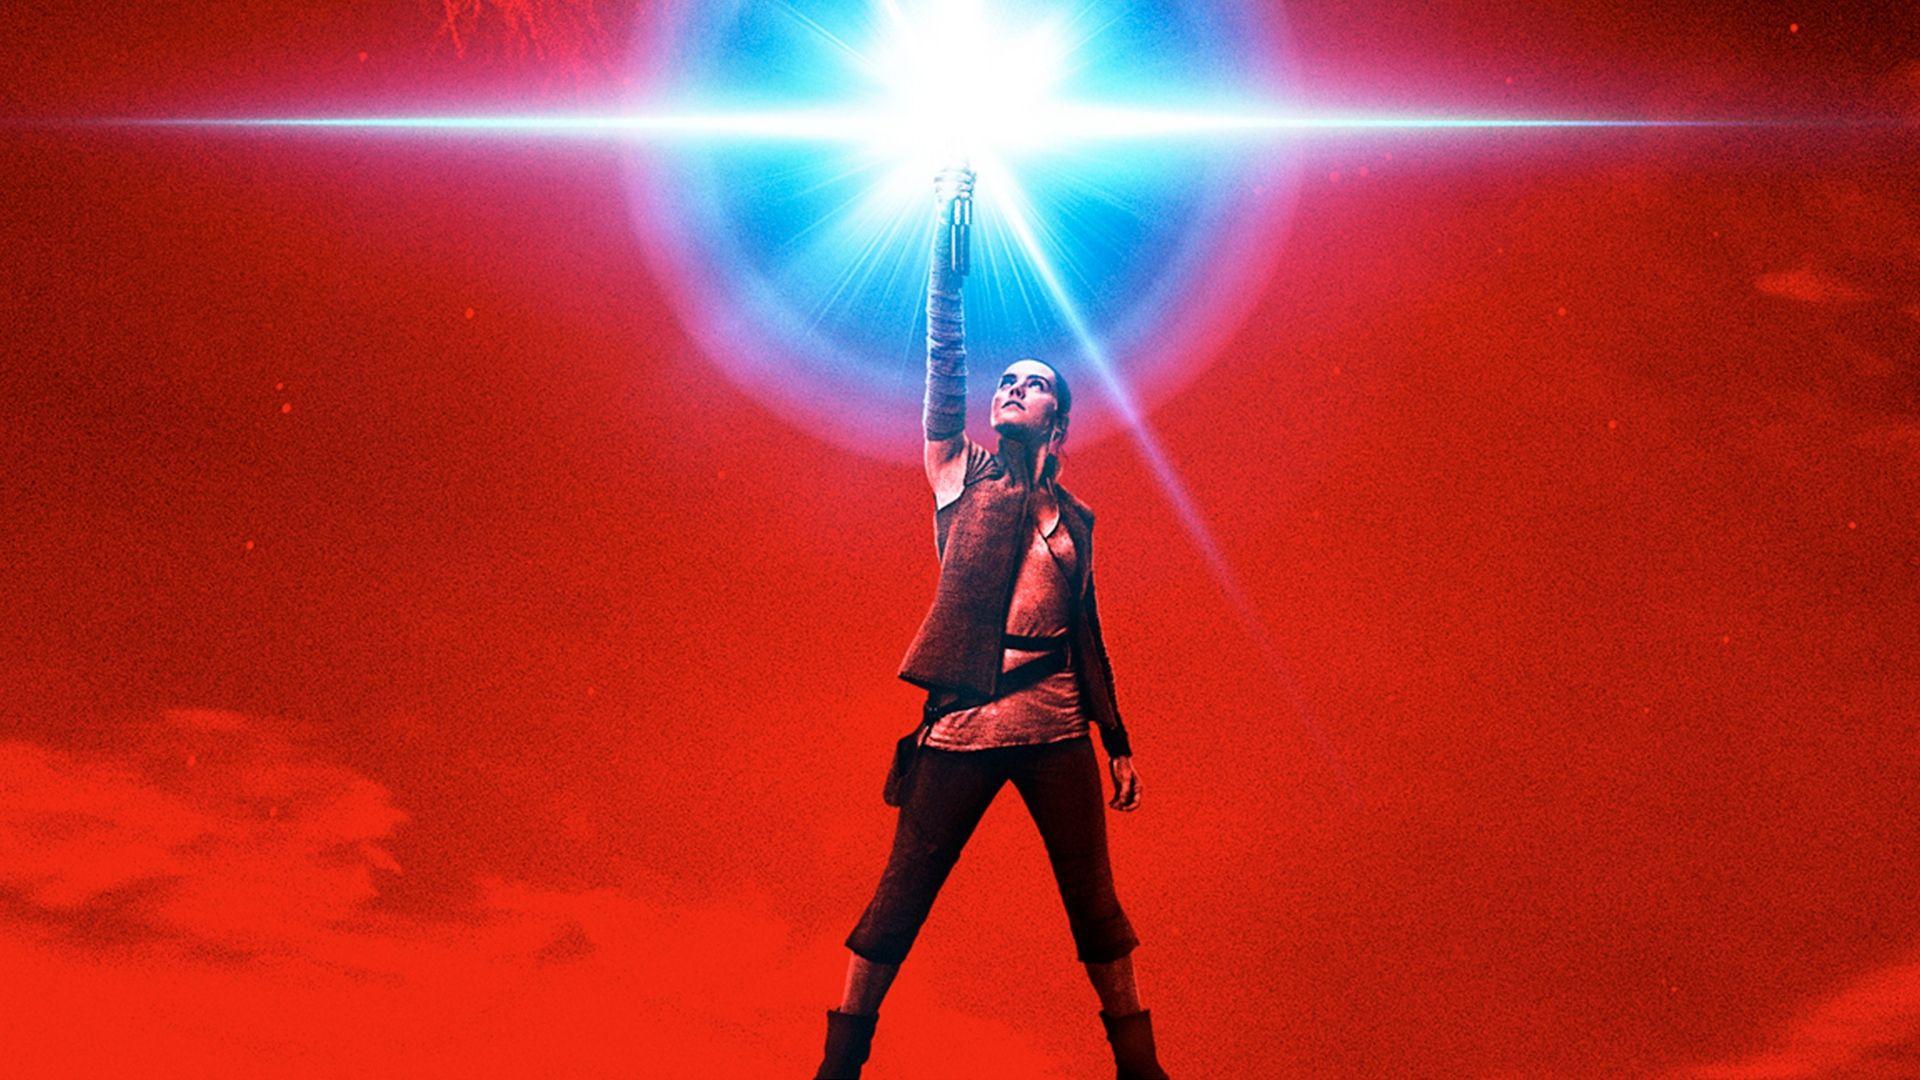 HD Rey Lightsaber Star Wars: The Last Jedi